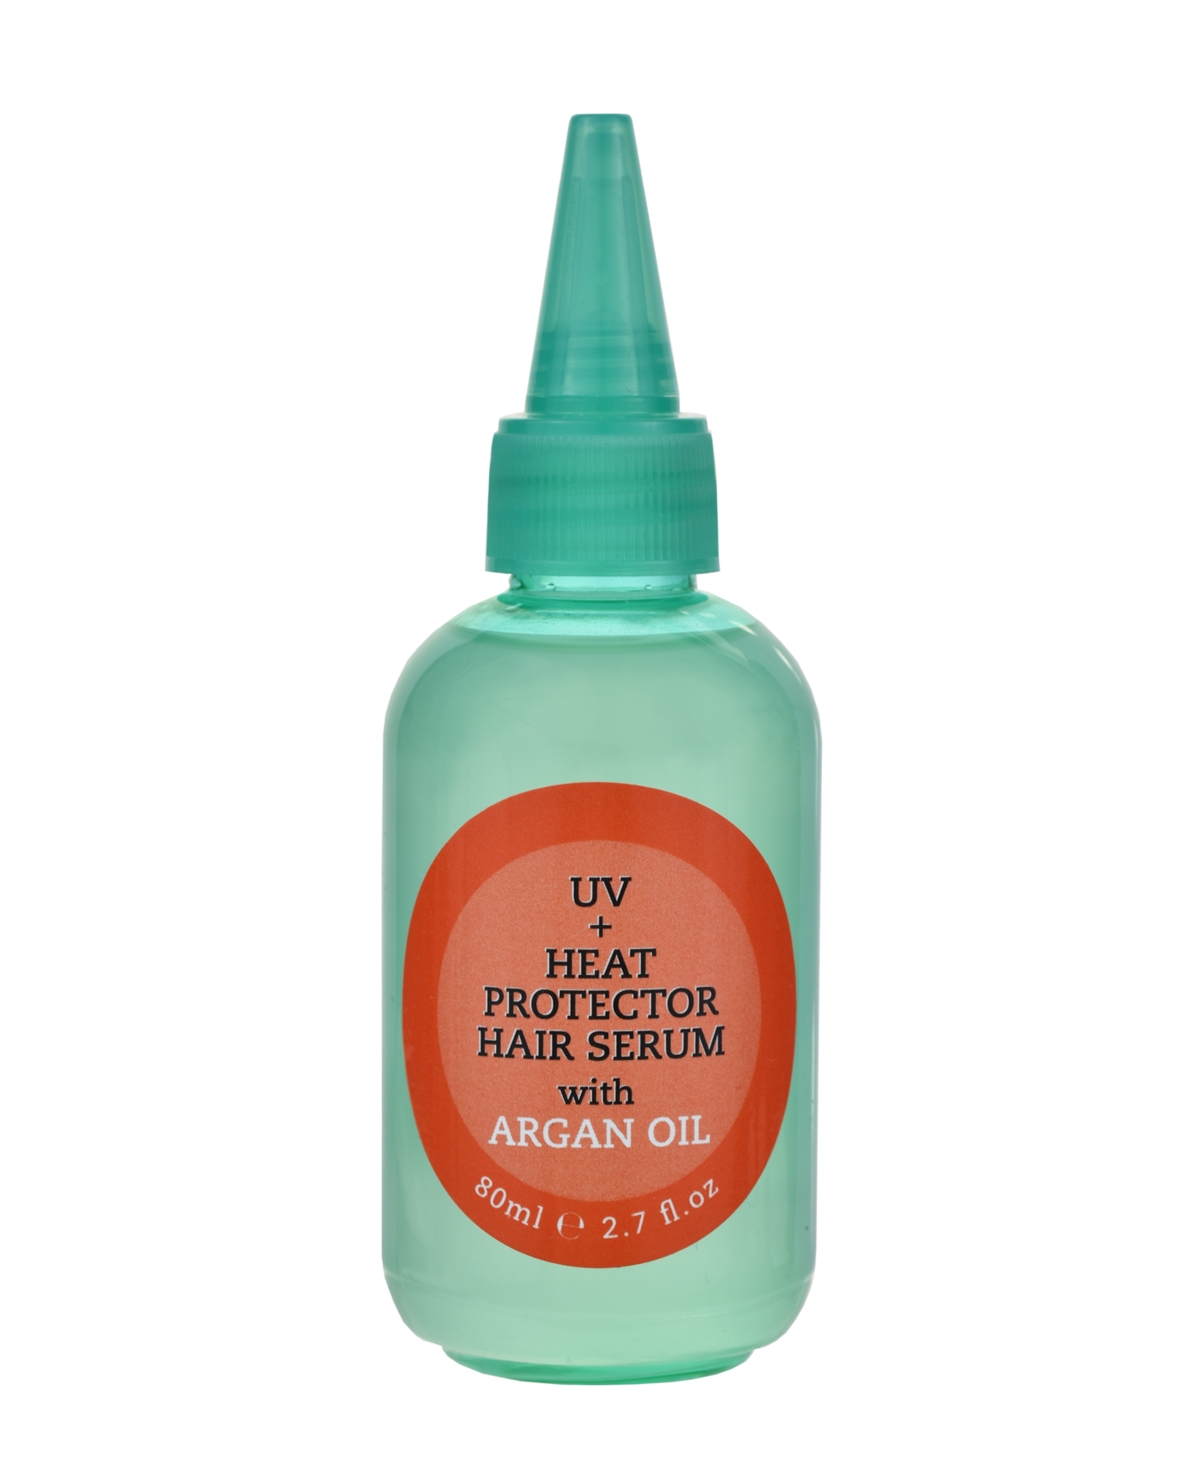 Uv + Heat Protector Hair Serum With Argan Oil, 2.7 oz. - Clear